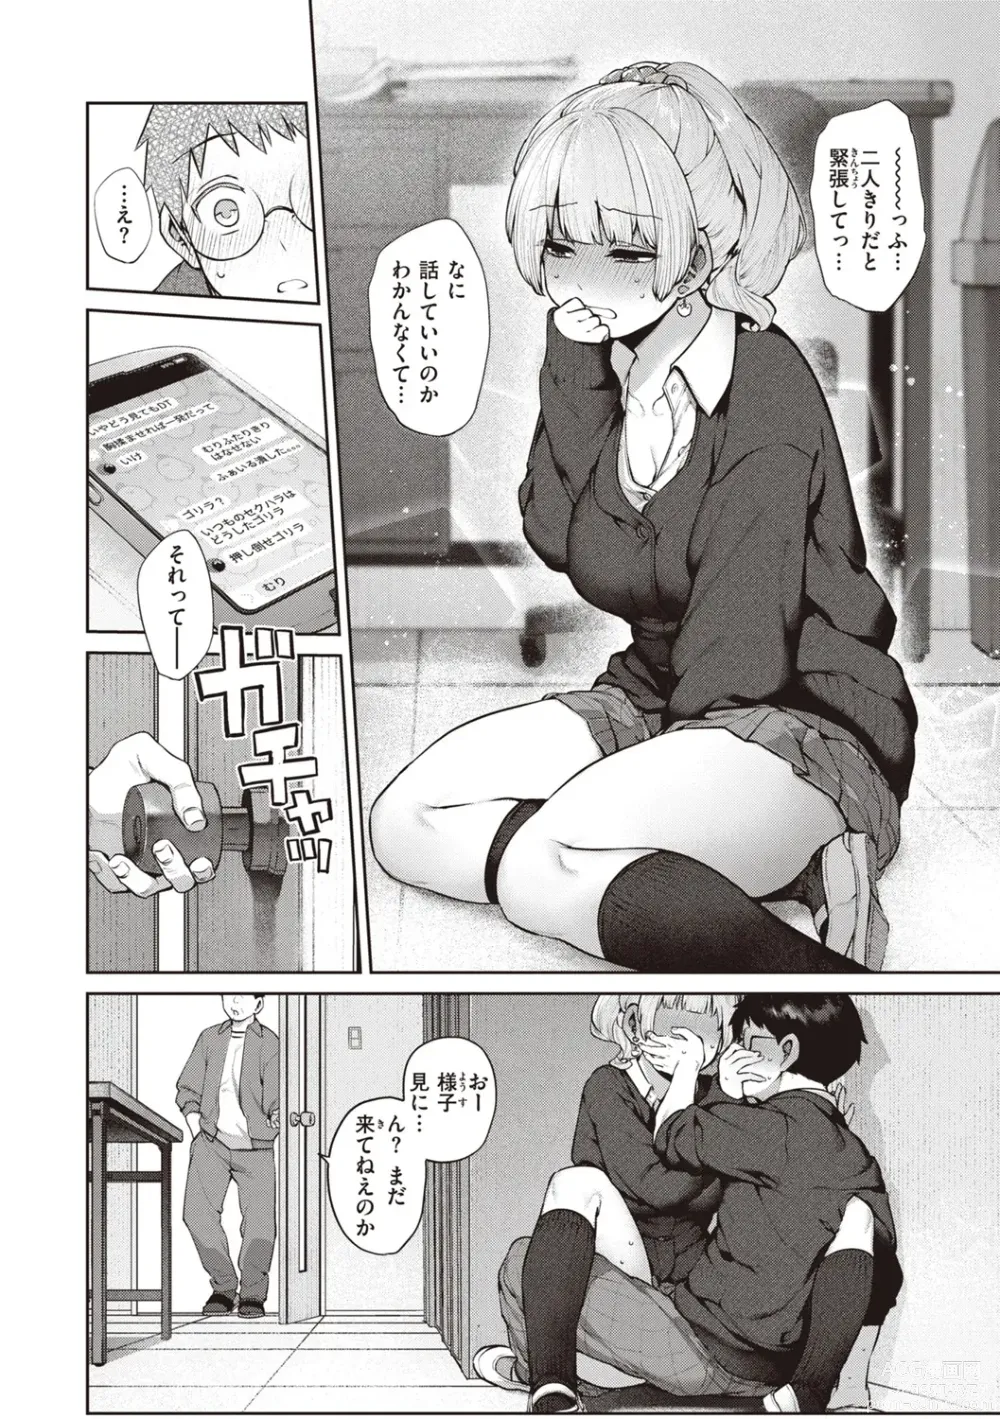 Page 10 of manga DA-DA-MO-RE